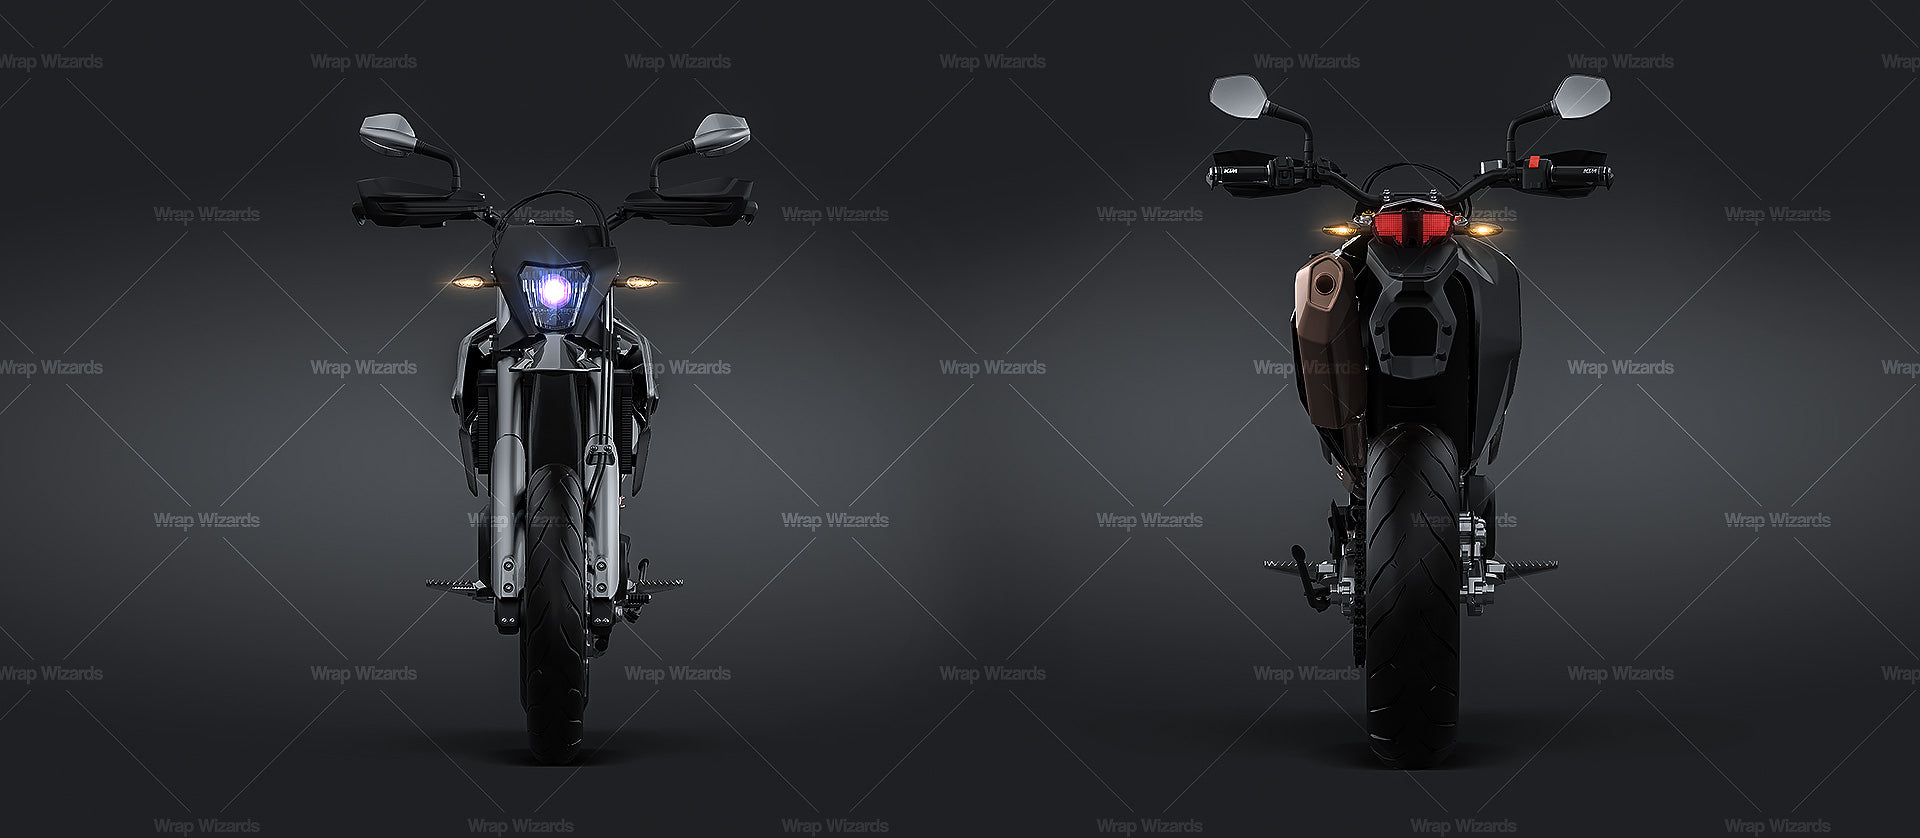 KTM 690 SMC-R 2020 - Motorcycle Mockup